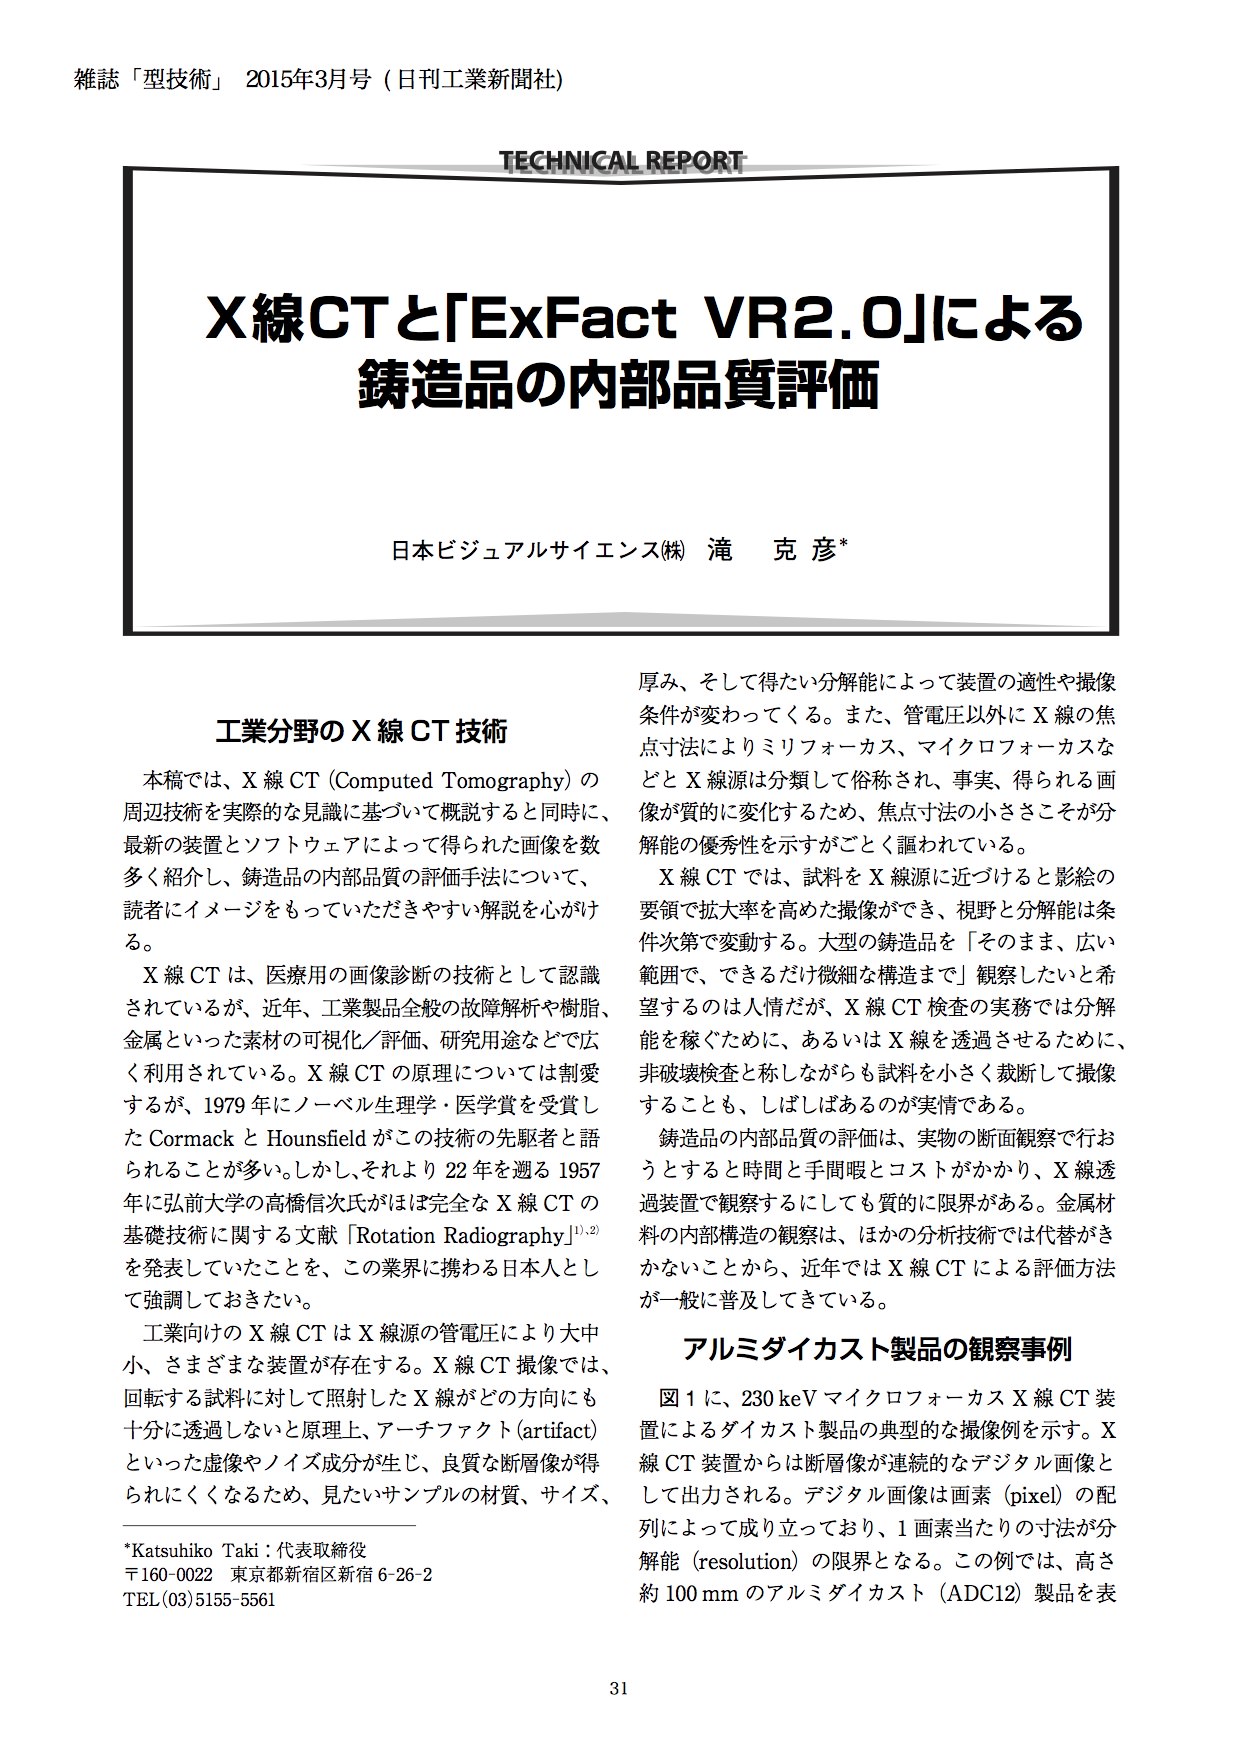 X線CTと『ExFact VR 2.0』による鋳造品の内部品質評価 滝 克彦(日本ビジュアルサイエンス) 『型技術』、日刊工業新聞社、Vol.30、No.3、pp.69-73、(2015).